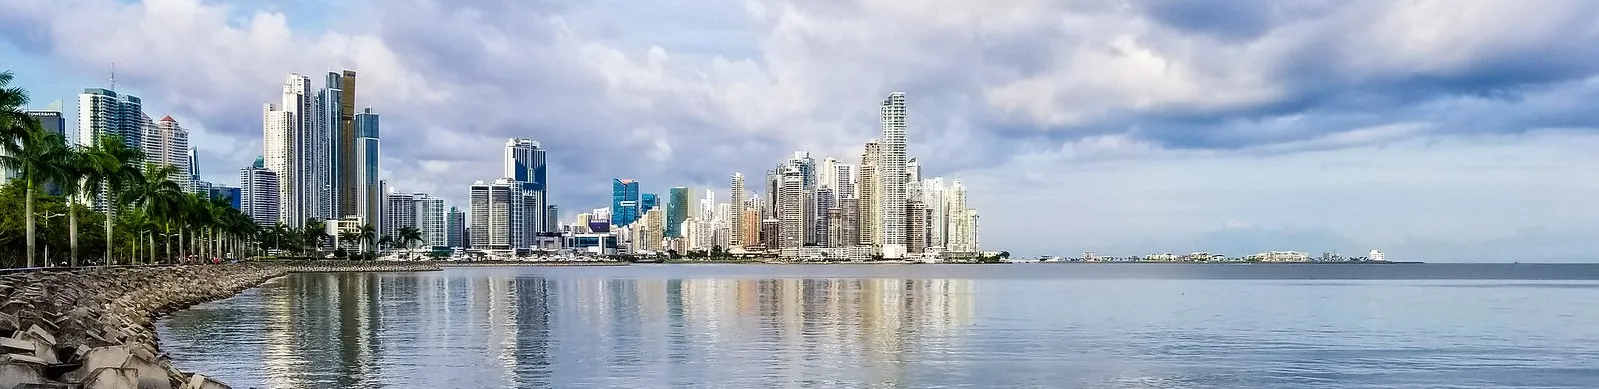 Panama Banner Image